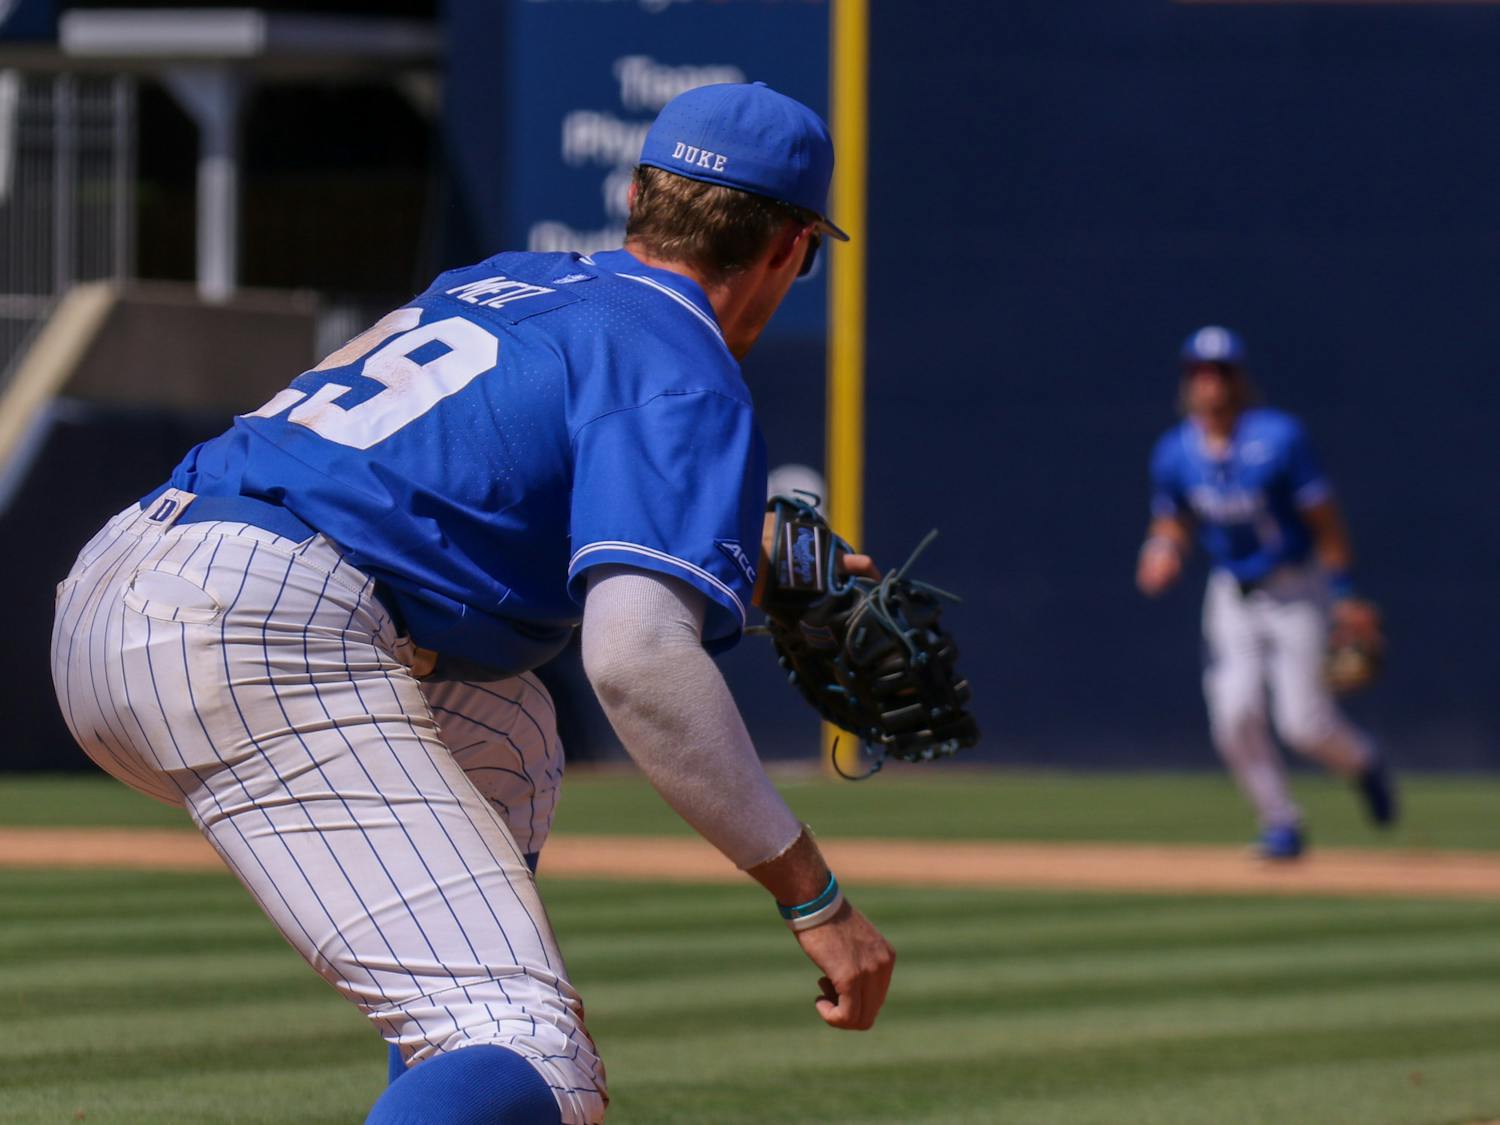 Graduate student MJ Metz hit three home runs in Duke's demolition of UNC Wilmington.